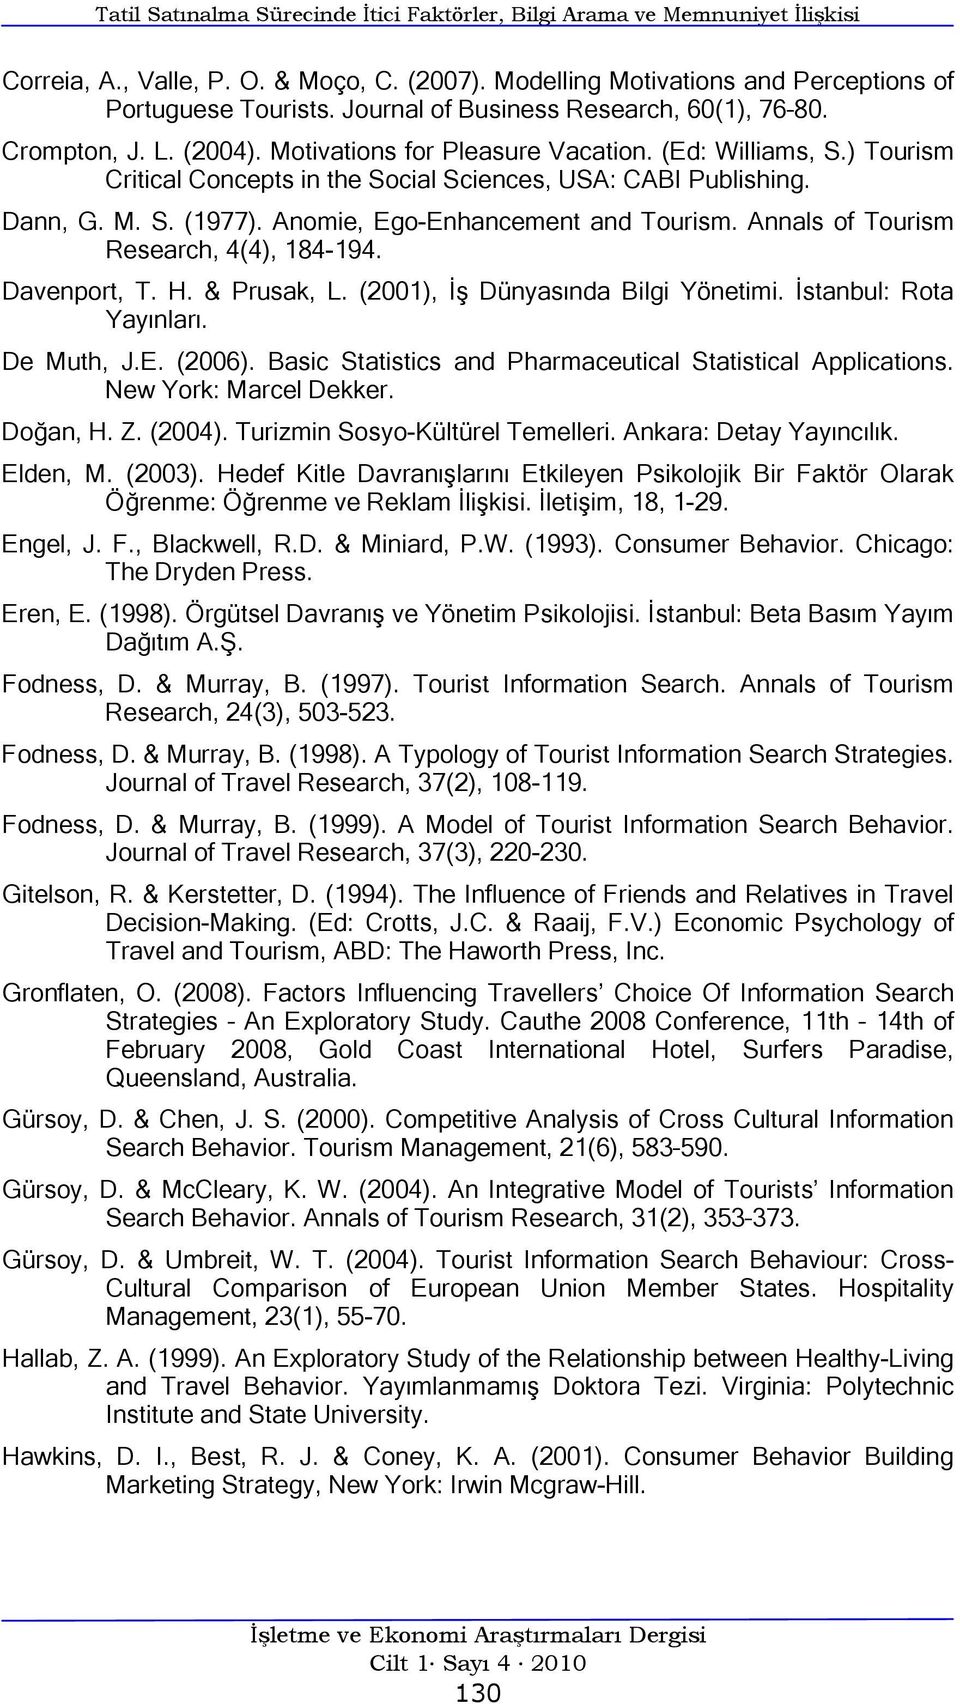 Dann, G. M. S. (1977). Anomie, Ego-Enhancement and Tourism. Annals of Tourism Research, 4(4), 184-194. Davenport, T. H. & Prusak, L. (2001), İş Dünyasında Bilgi Yönetimi. İstanbul: Rota Yayınları.